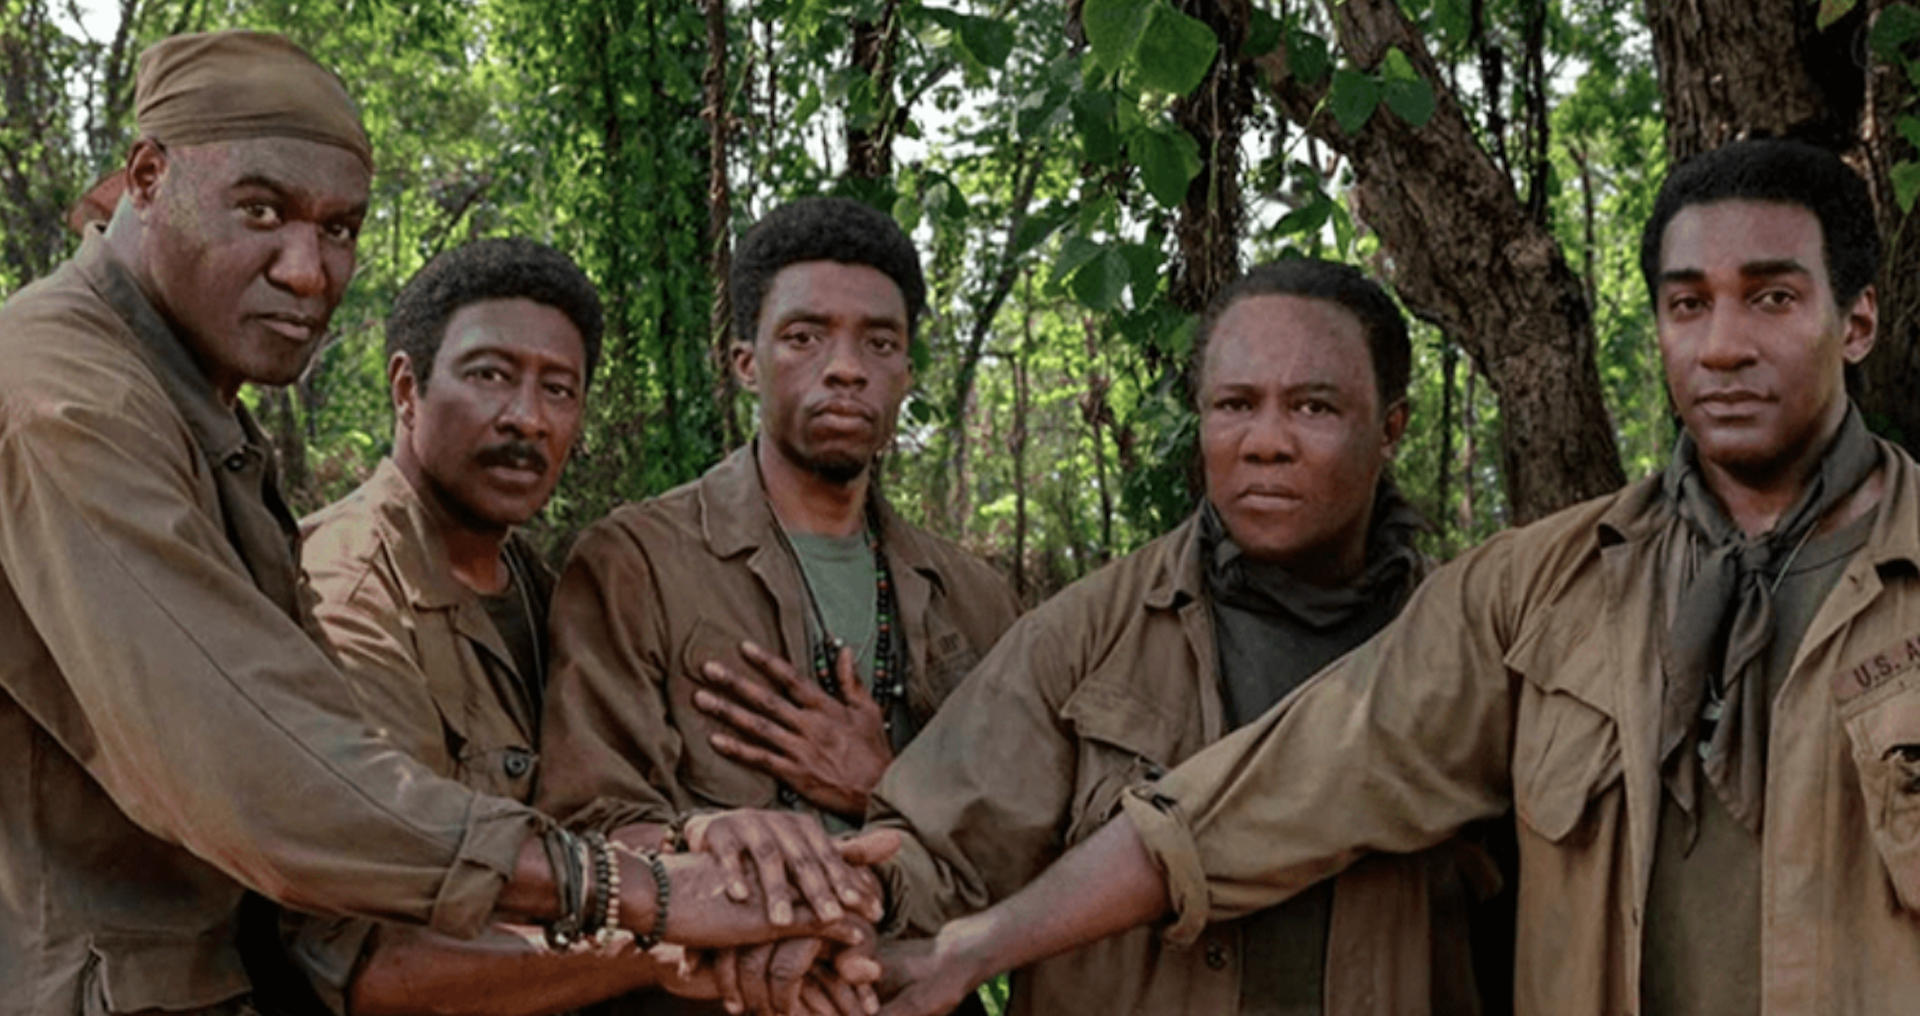 Clarke Peters Regrets Thinking 'Da 5 Bloods' Costar Chadwick Boseman Was Getting Special Treatment On Set